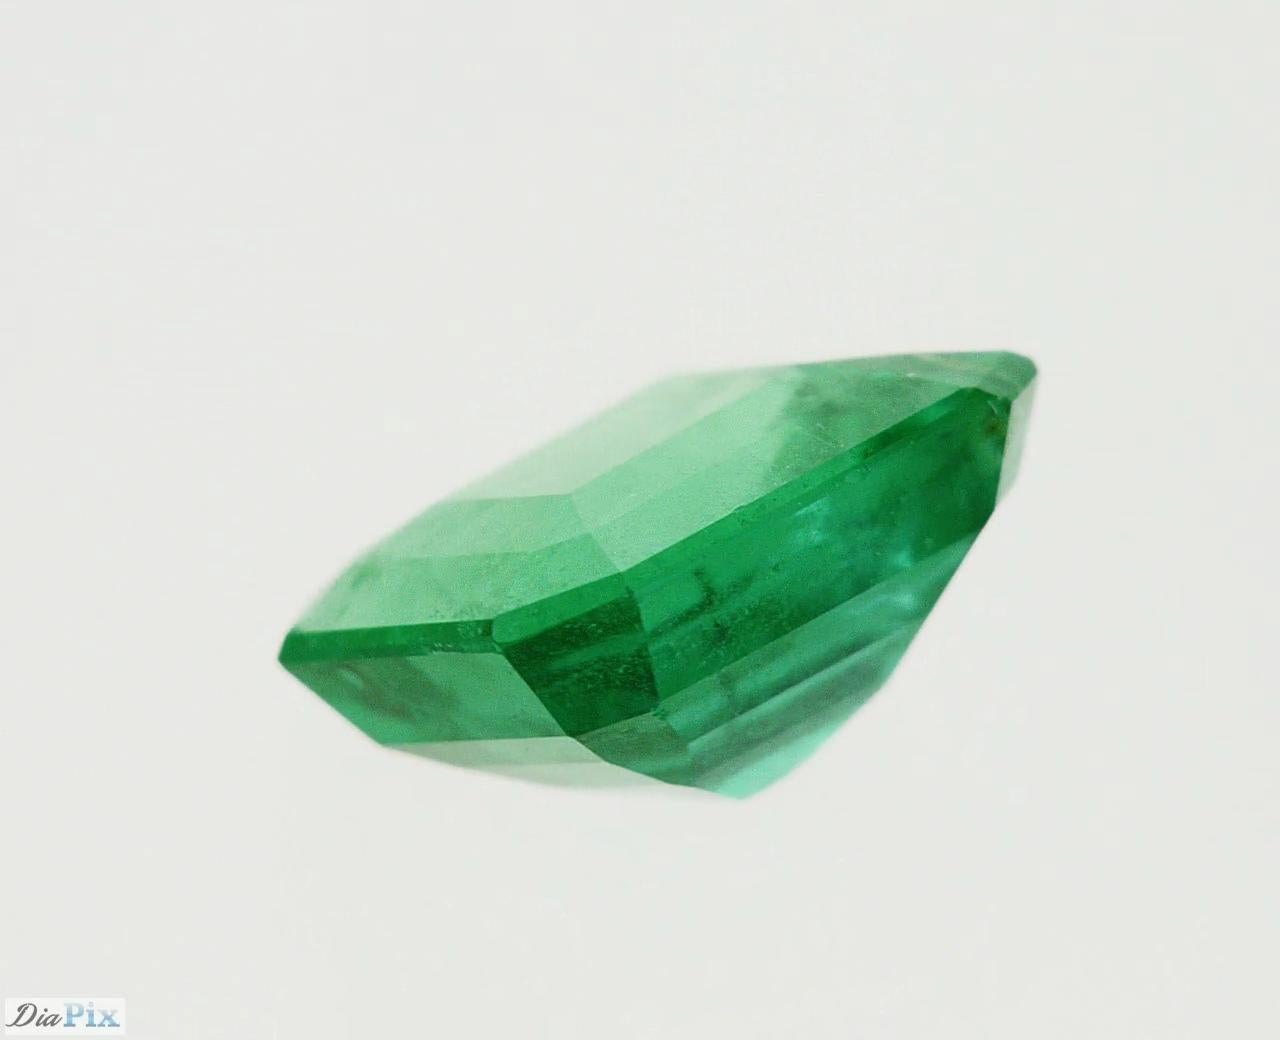 Octagon Cut Certified Intense / Vivid Green Emerald  For Sale